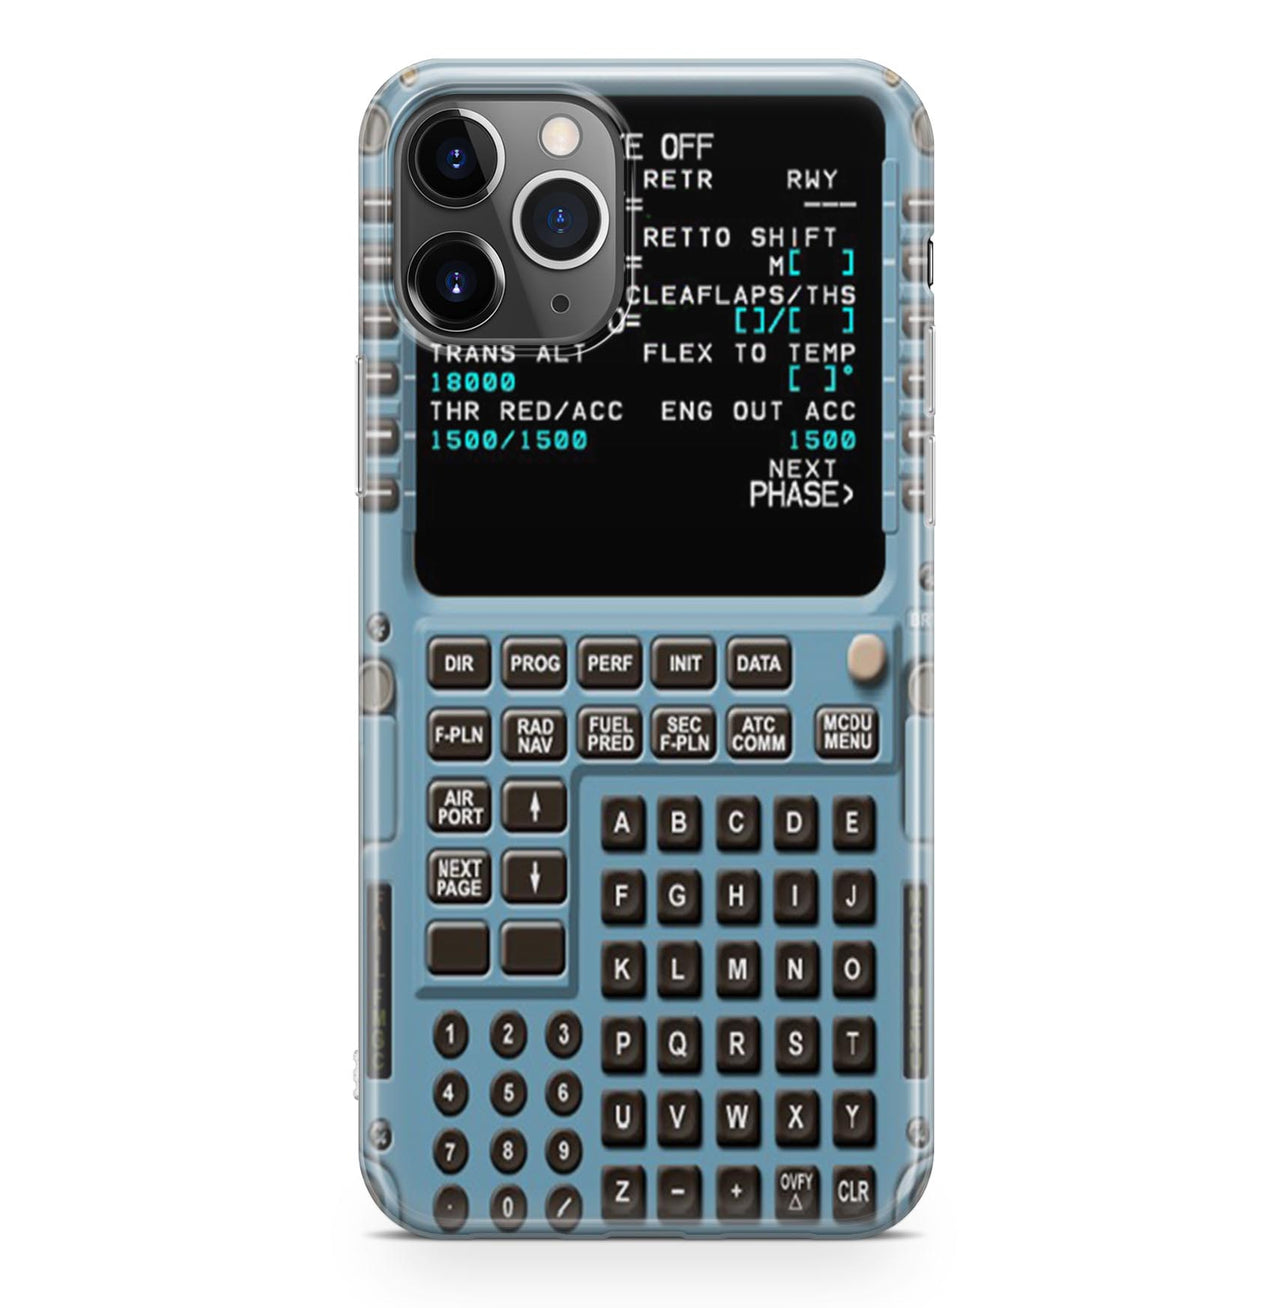 Flight Management Computer 1 Designed iPhone Cases